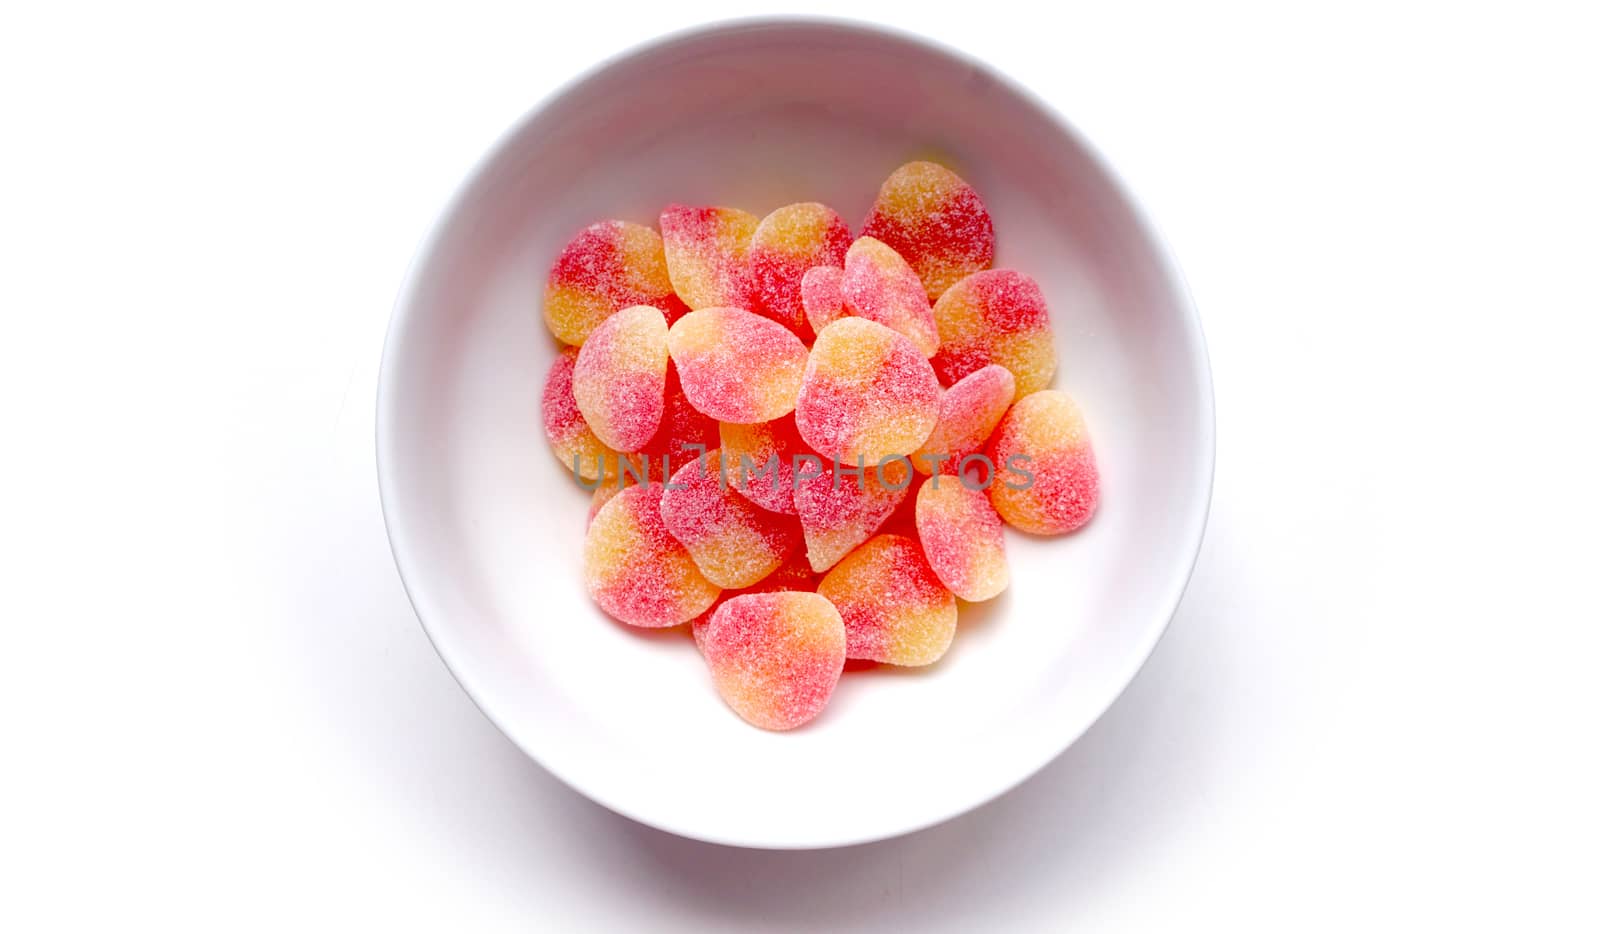 jelly sugar in the white bowl  by polarbearstudio